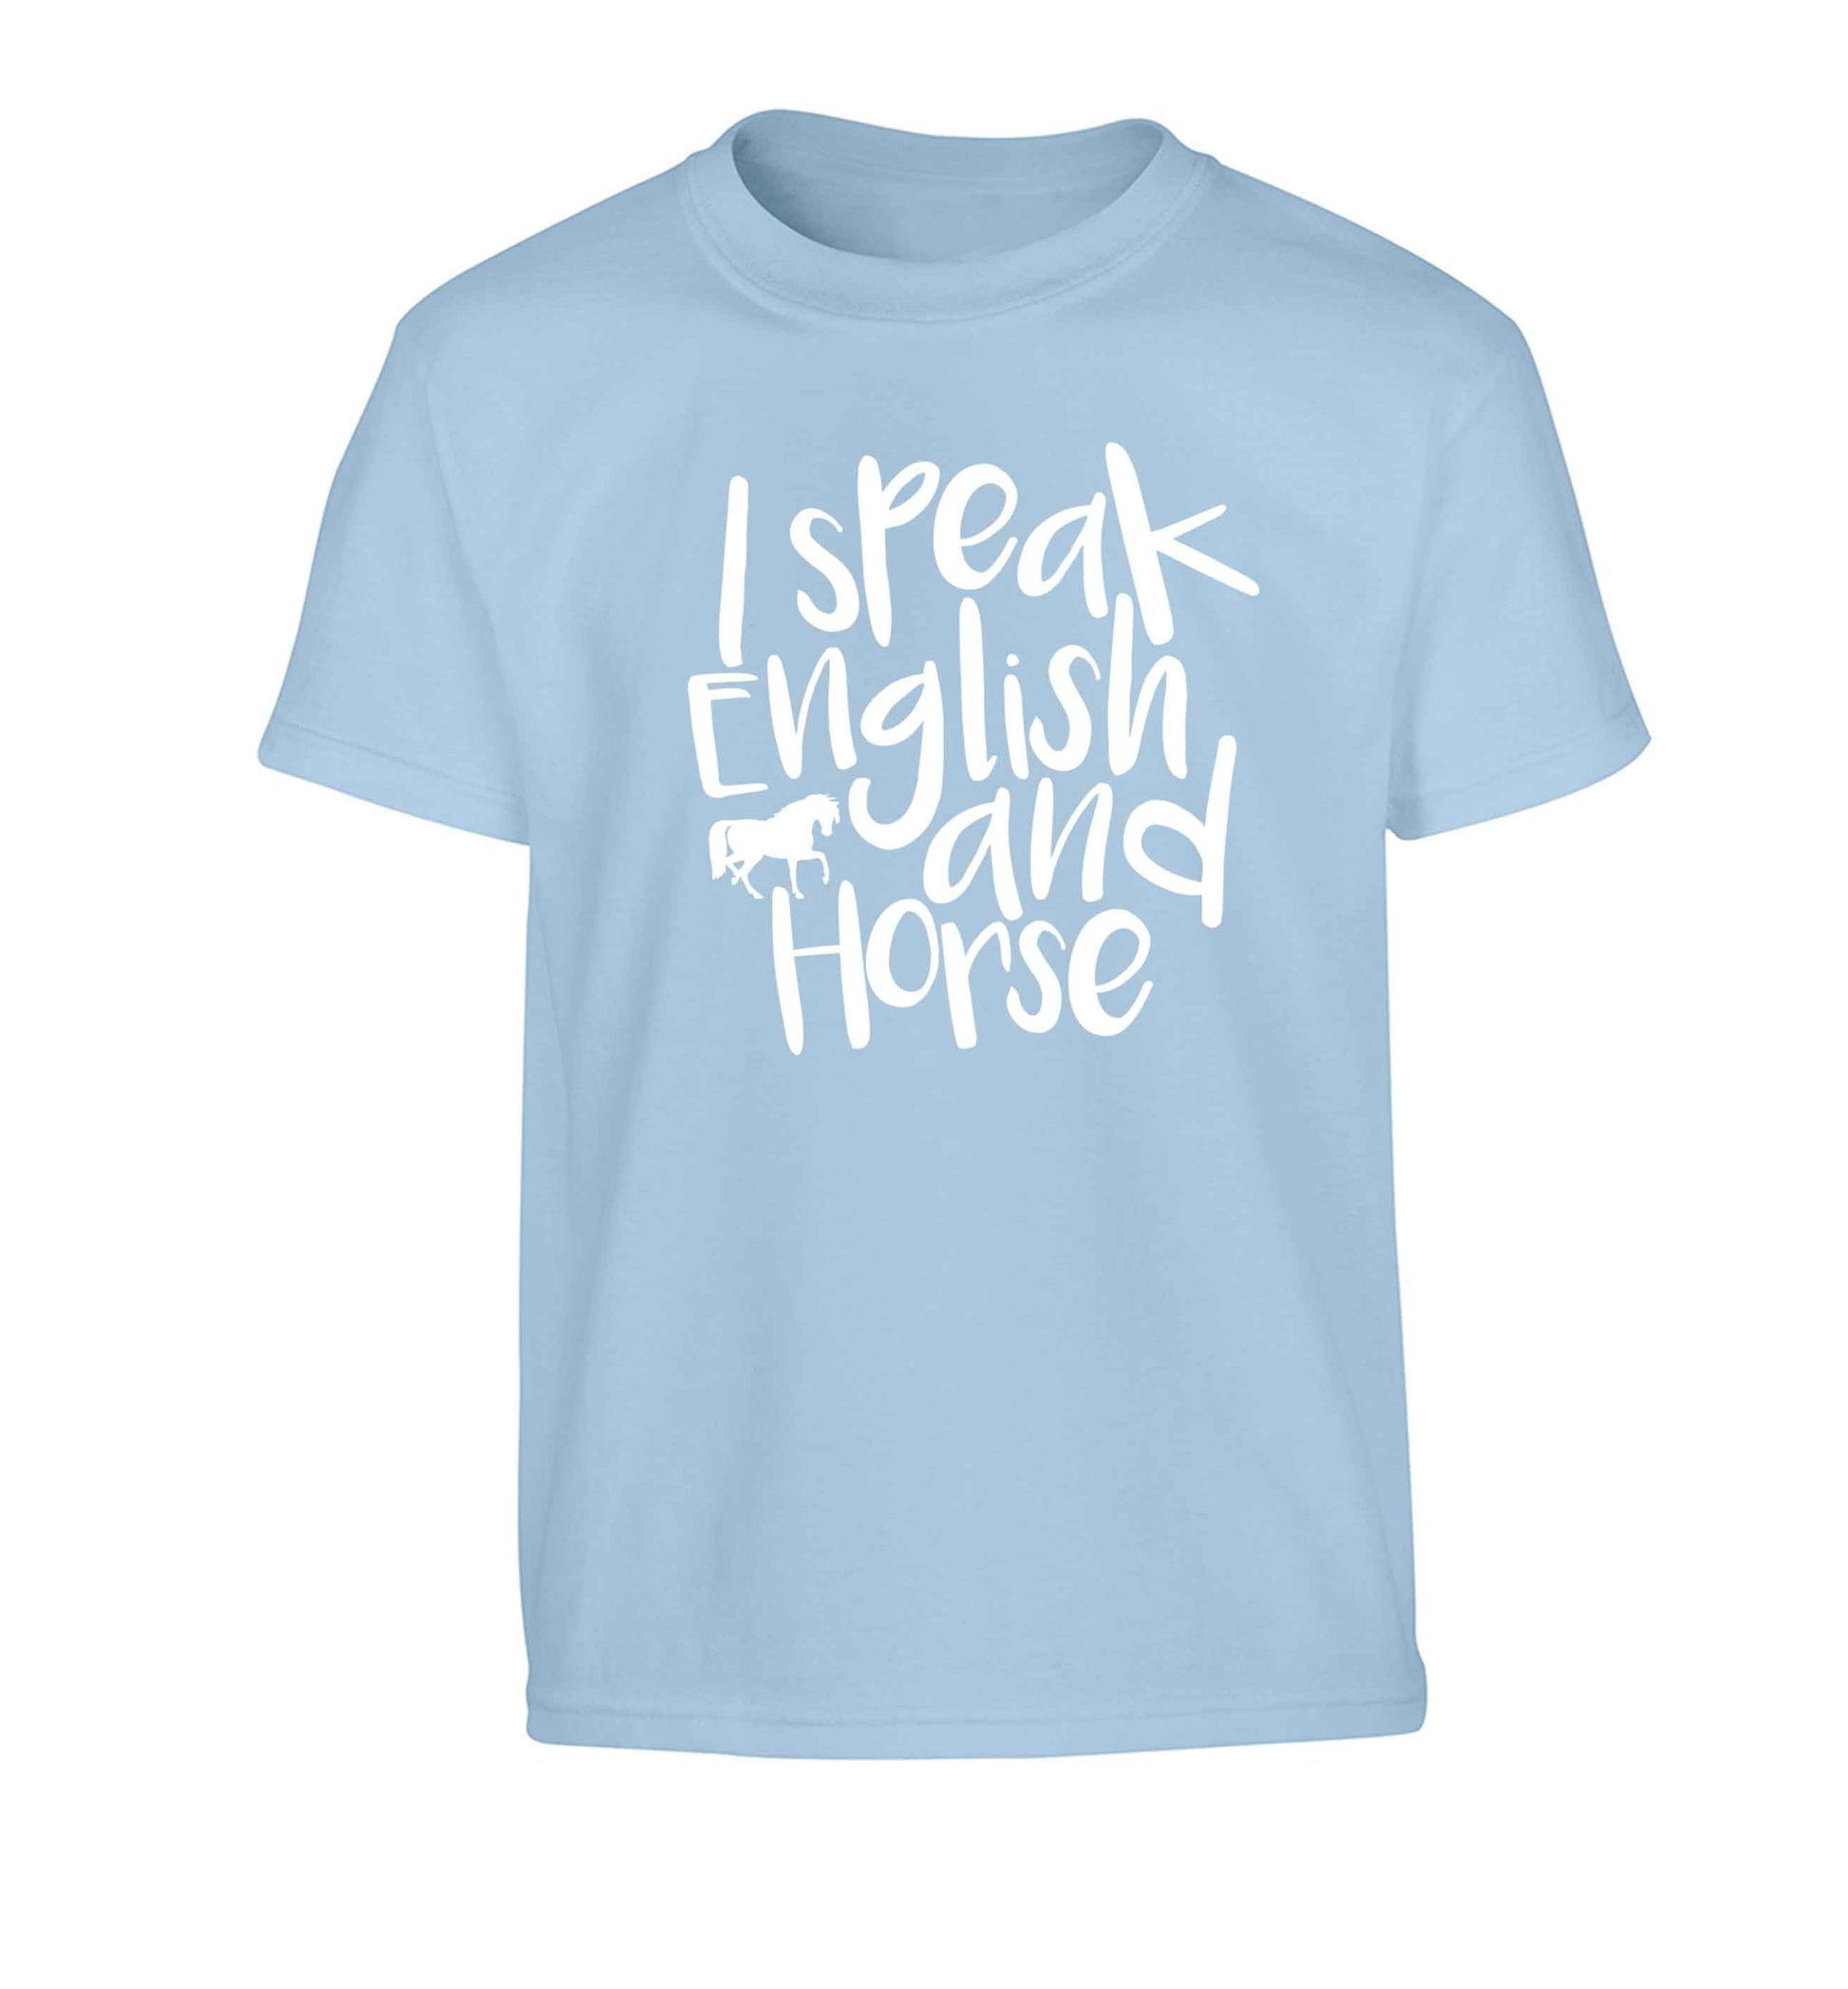 I speak English and horse Children's light blue Tshirt 12-13 Years